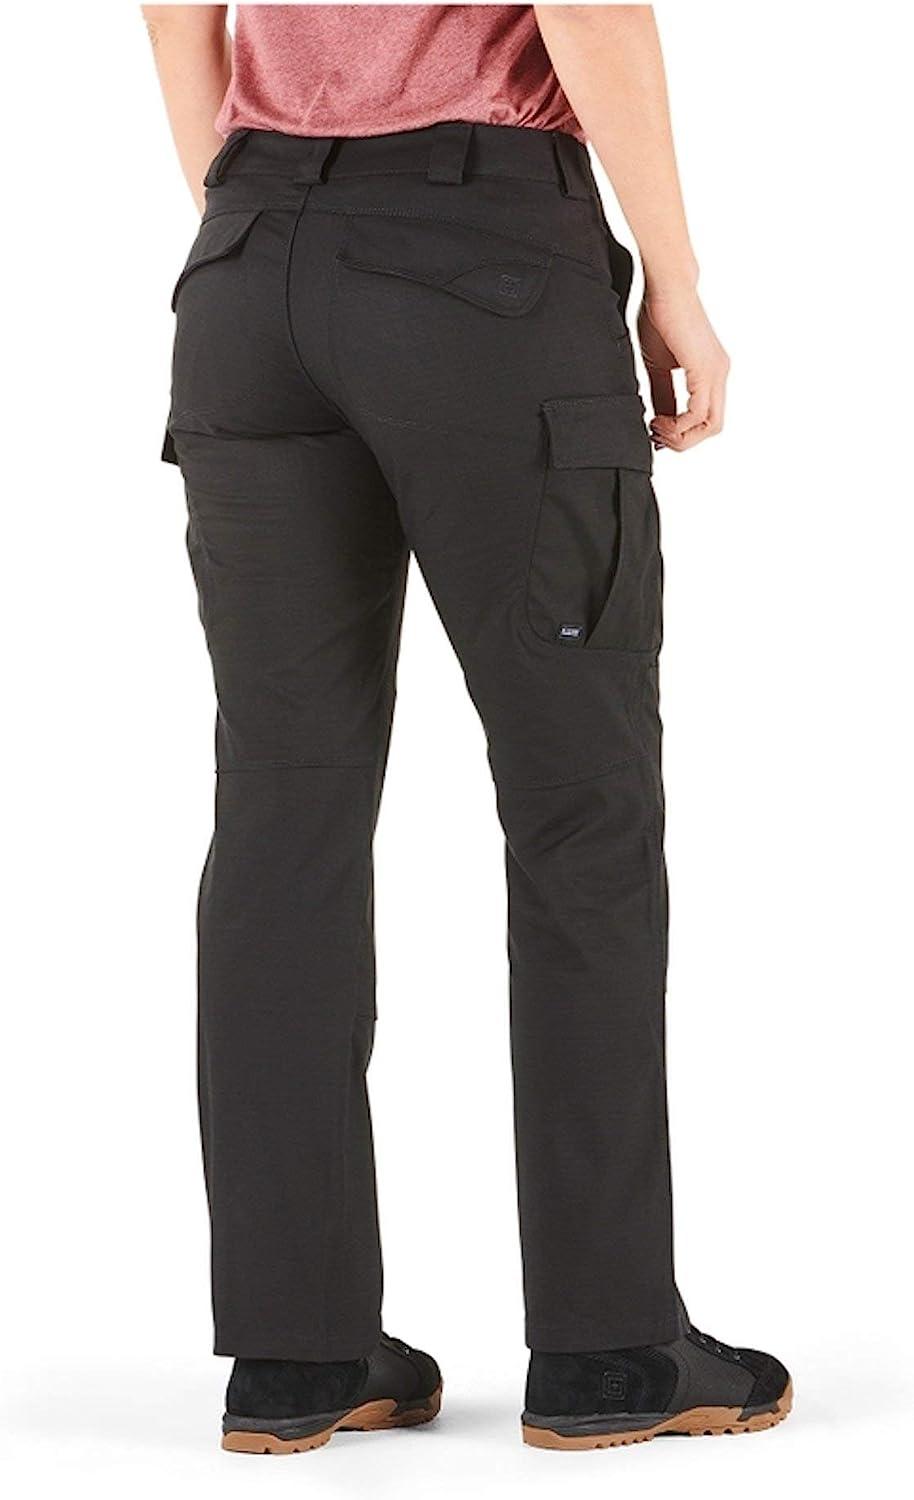 5.11 Tactical Women's Stryke Pants